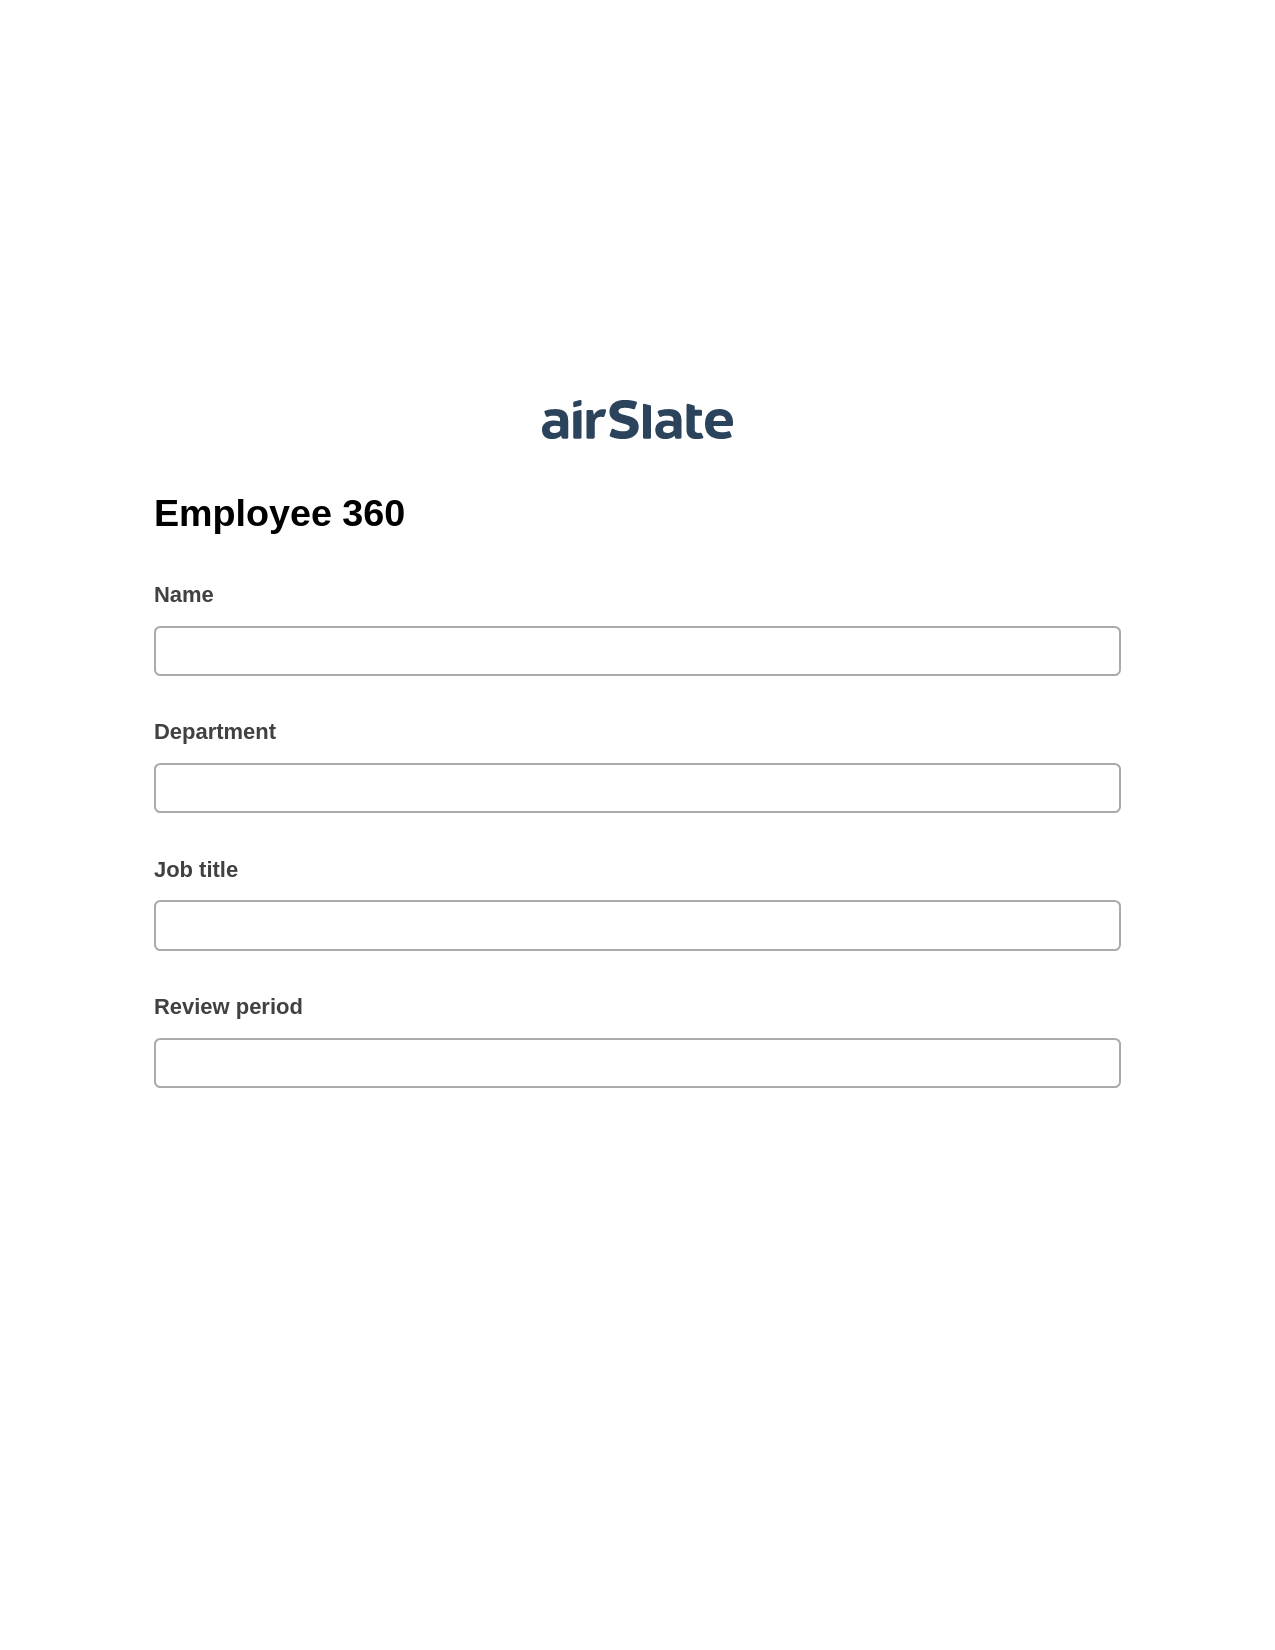 Multirole Employee 360 Pre-fill from Excel Spreadsheet Bot, Remove Slate Bot, Post-finish Document Bot